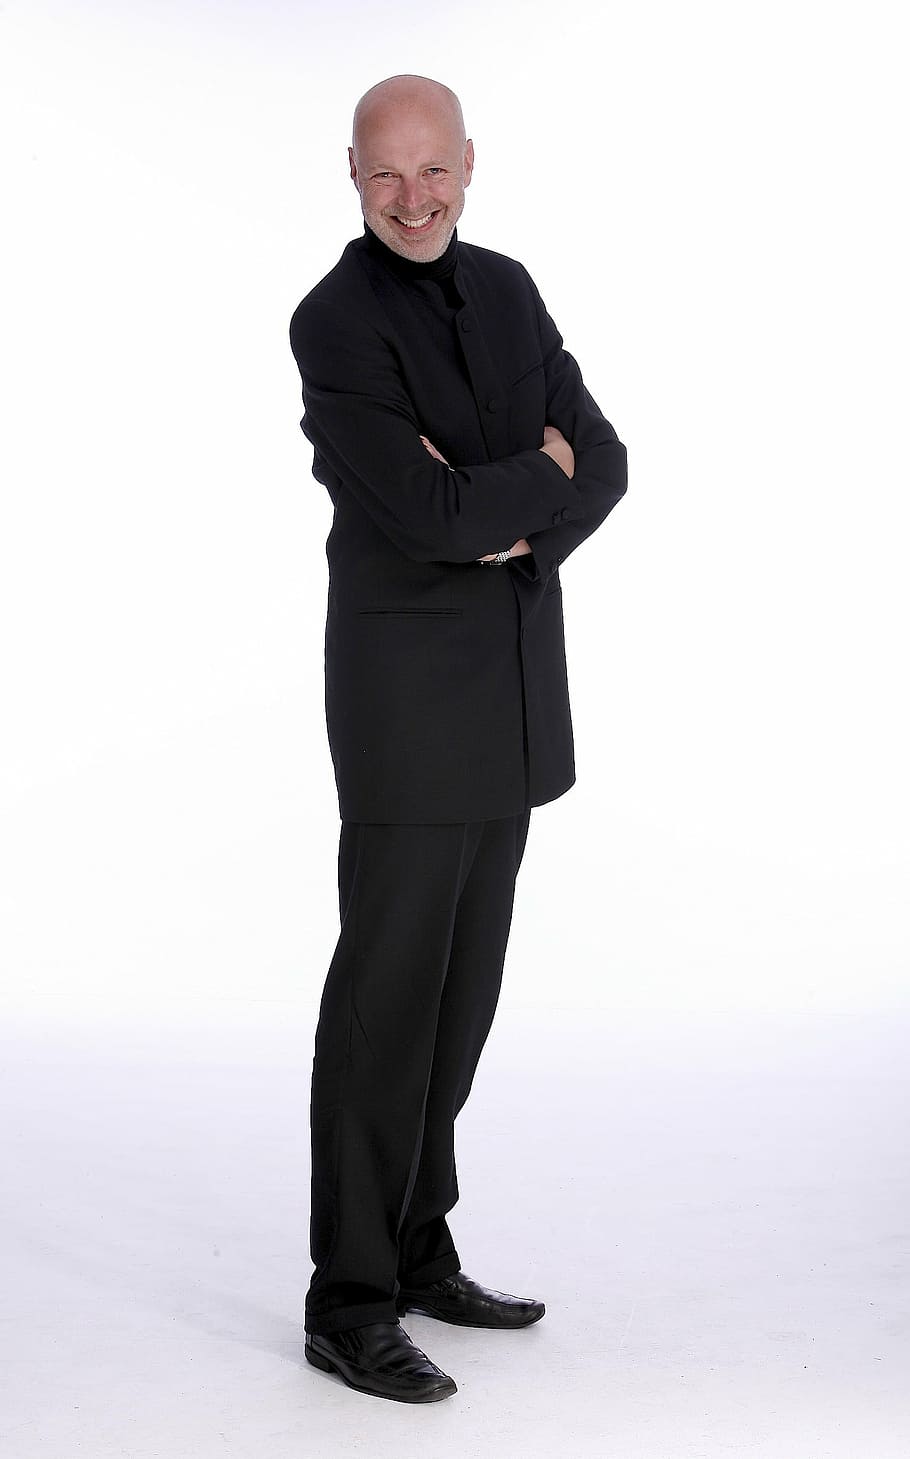 smiling man wearing black suit jacket, businessman, germany, laughing